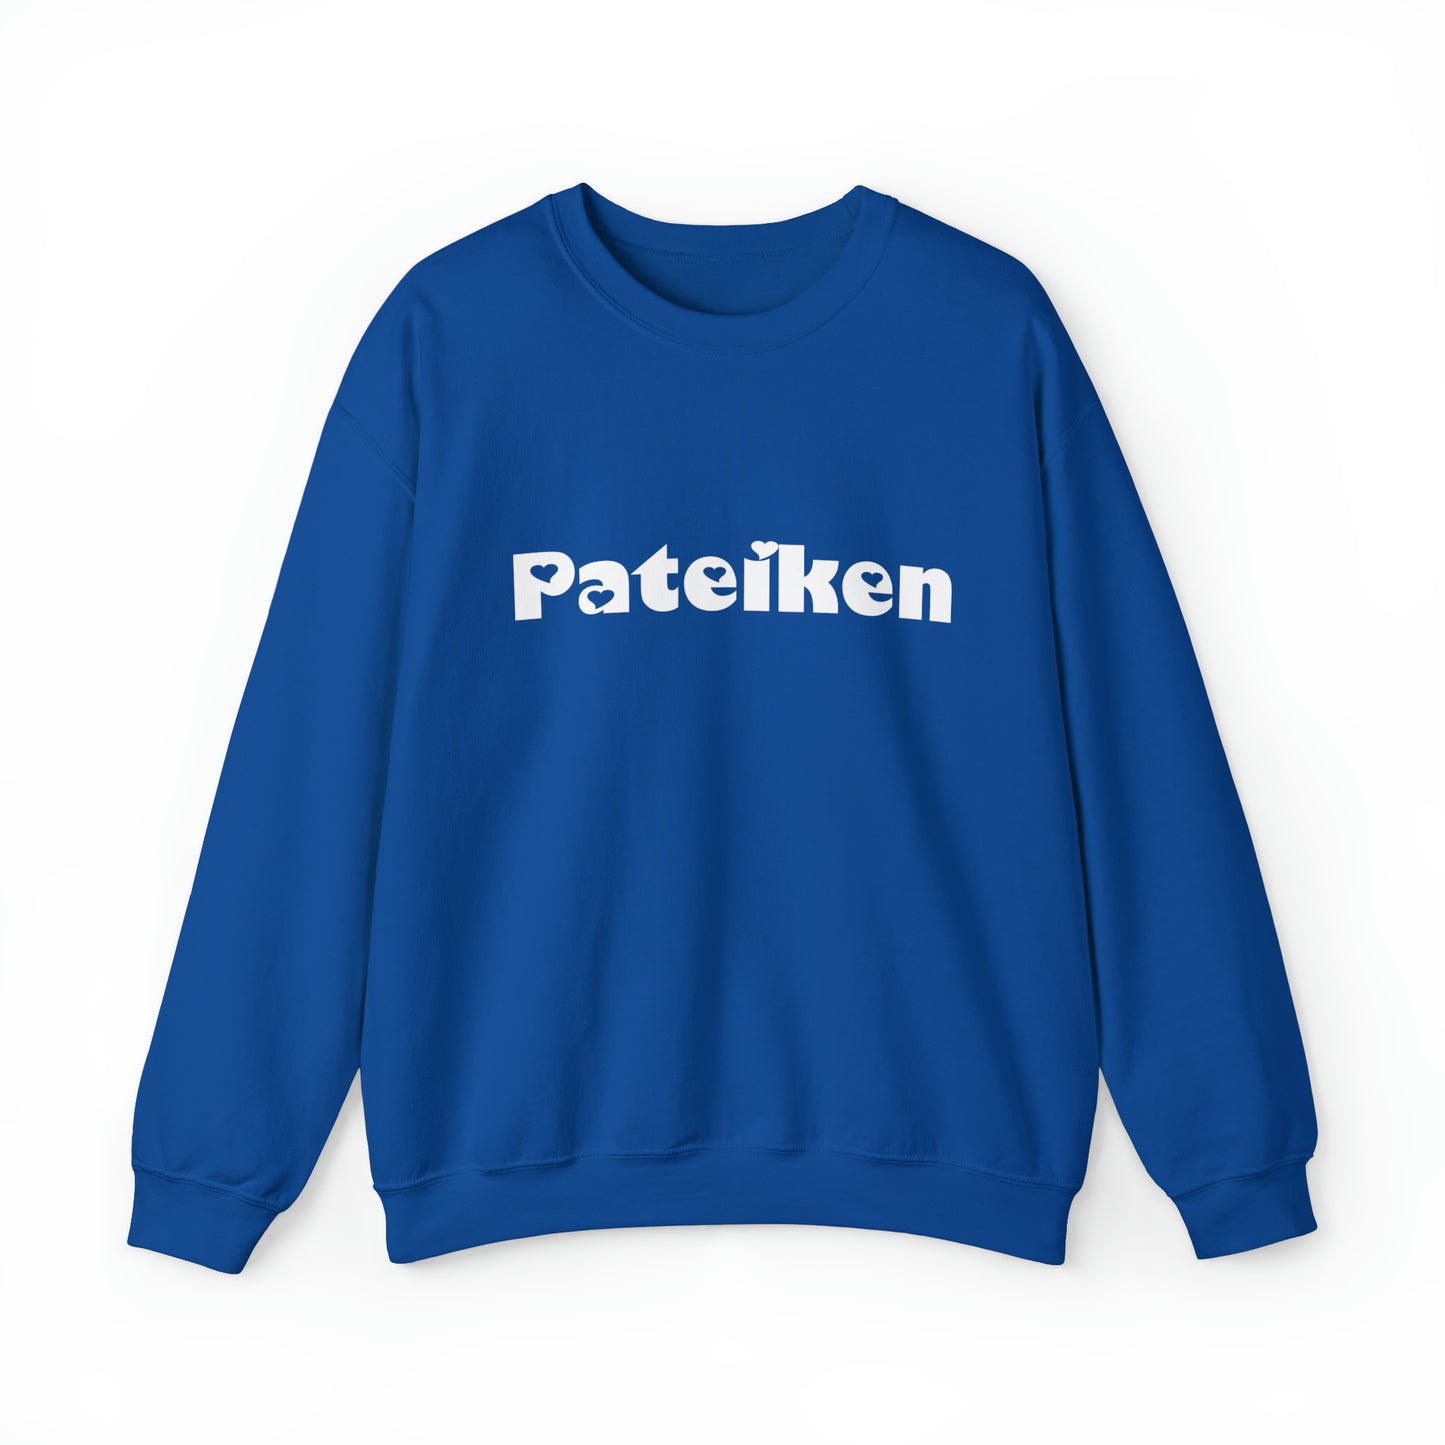 Int Oilsjters - Sweater -  Pateiken